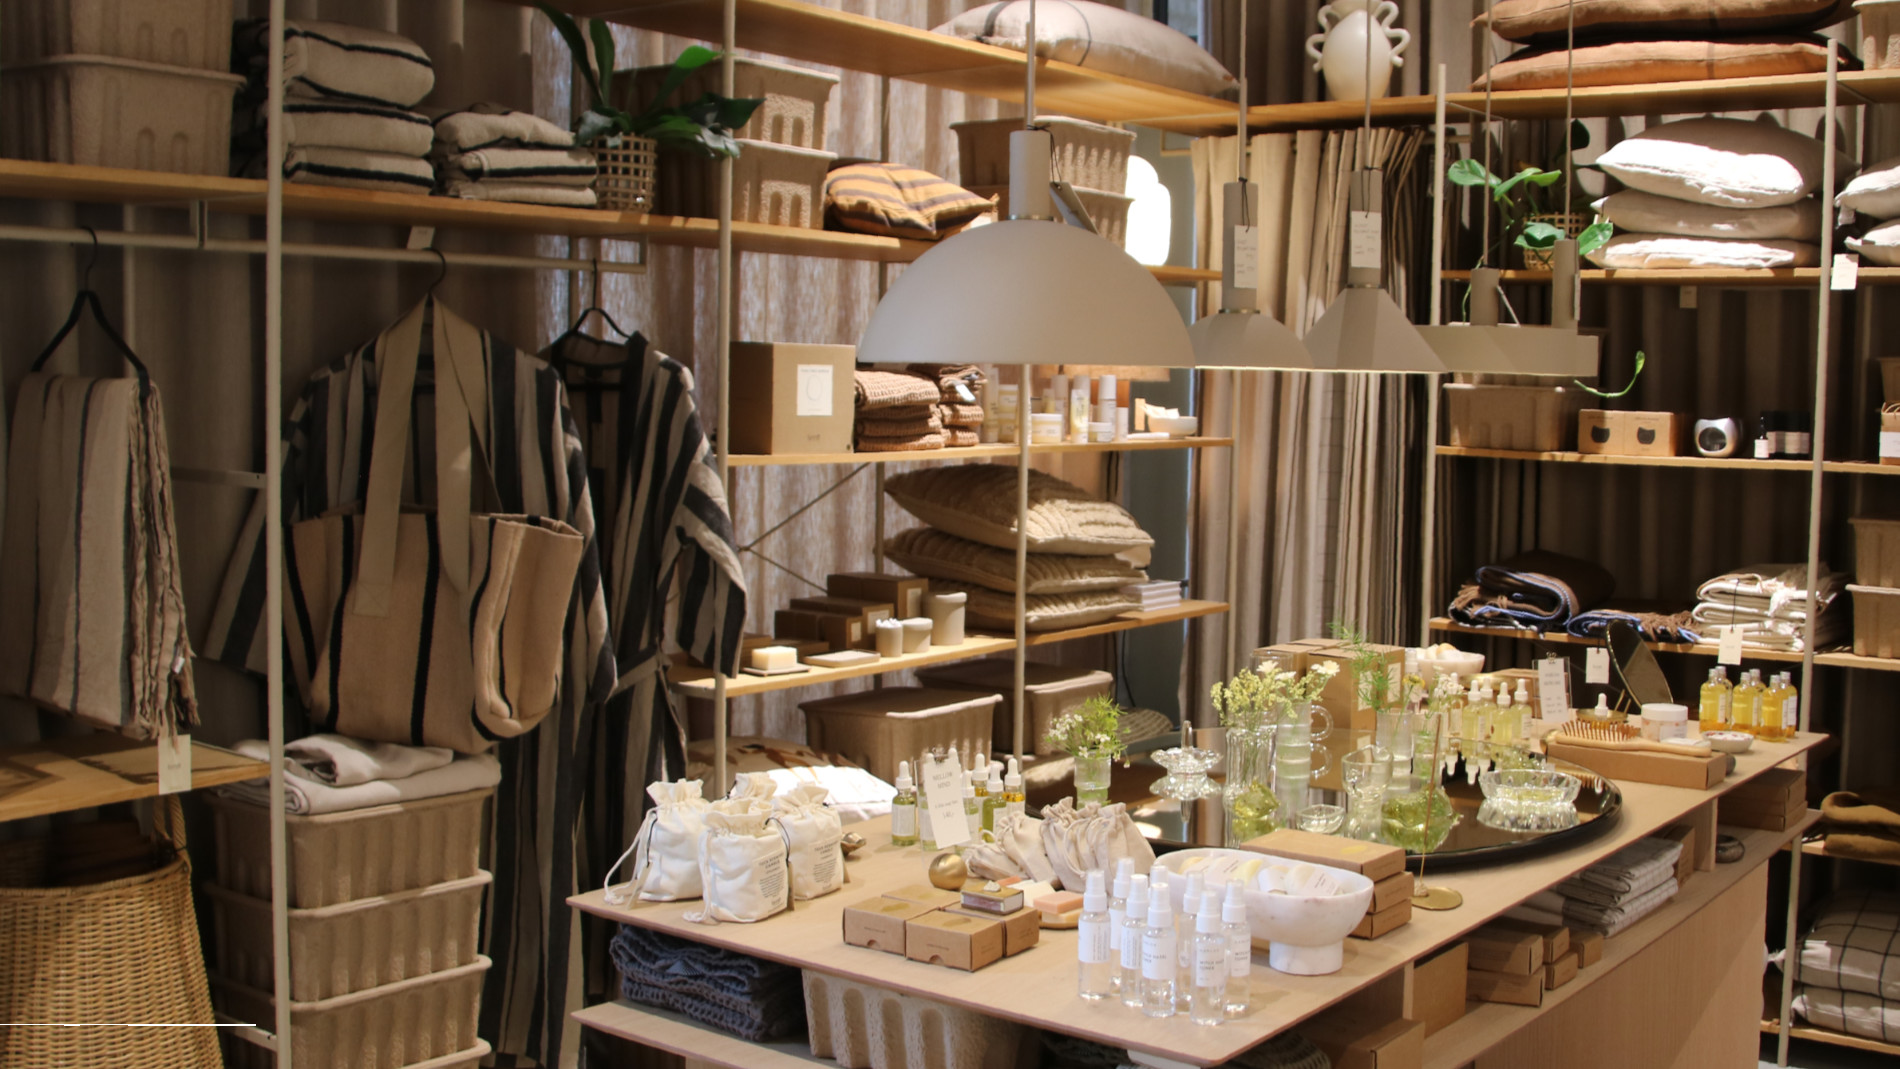 Schöne Shop-Ecke mit Wellness-Produkten inkl. Bademänteln, Handtüchern bei Ferm Living in Kopenhagen